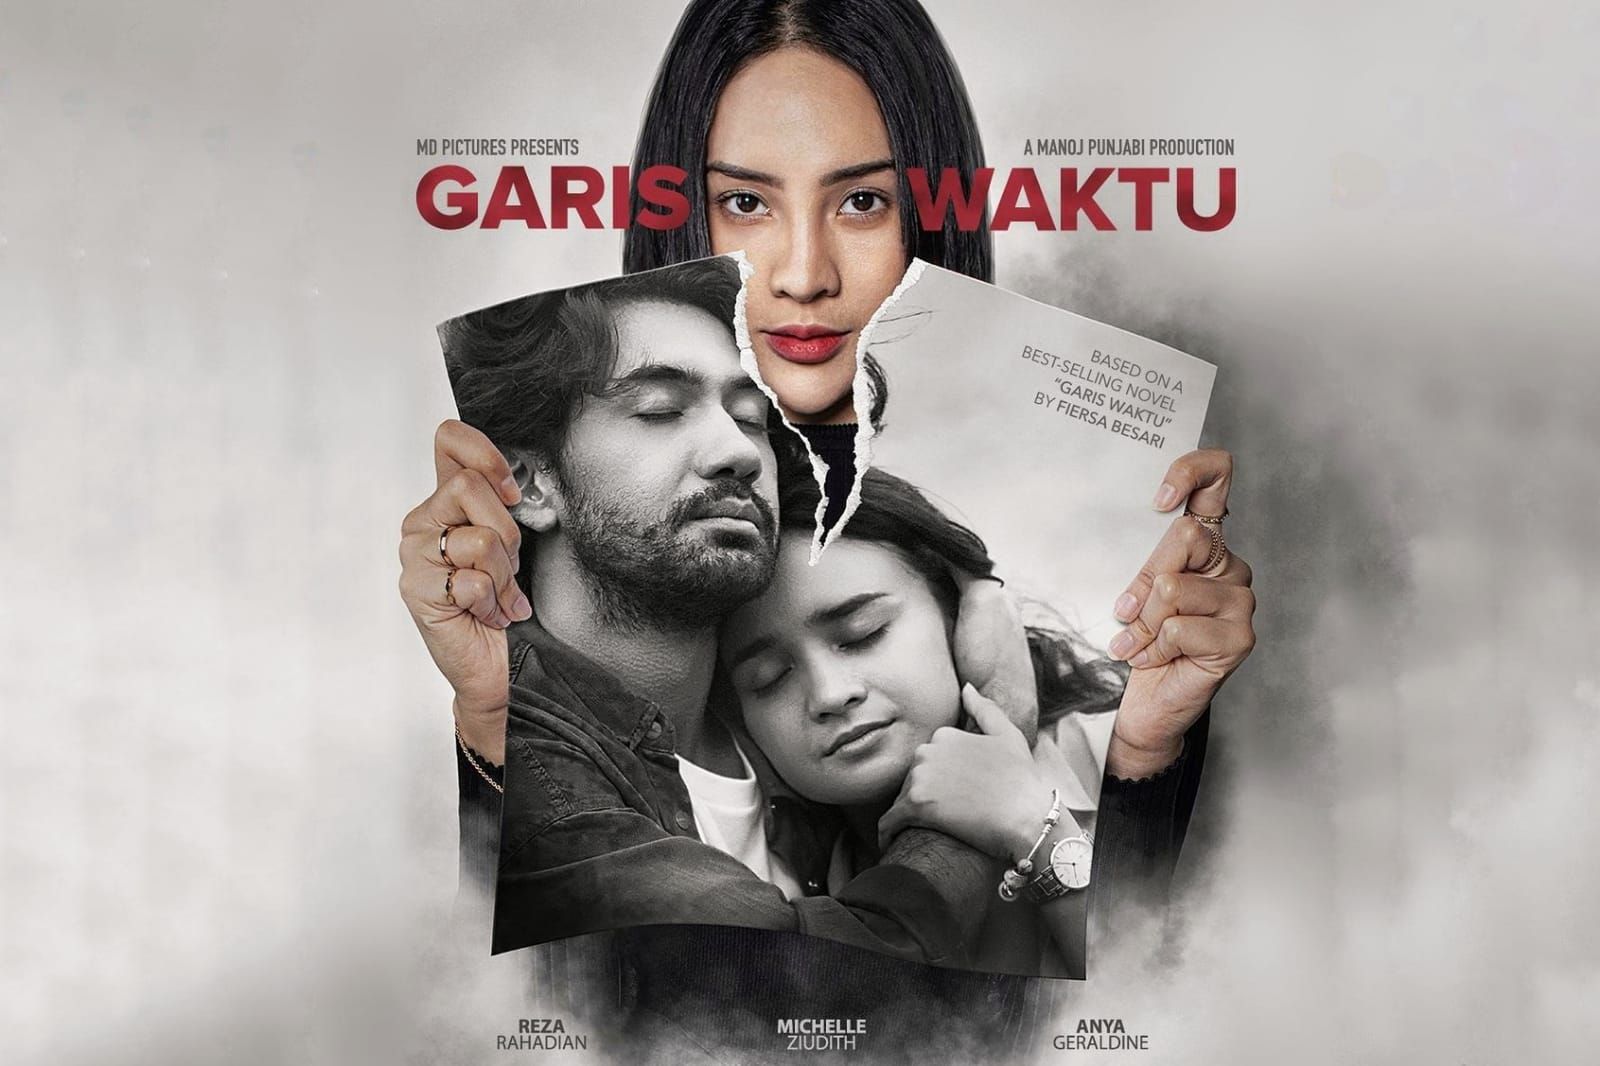 Nonton Film GARIS WAKTU di Bioskop CGV Grand Kawanua City Manado, Ini Jadwal  dan Harga Tiket Lengkap Jumat 25 - Purbalinggaku